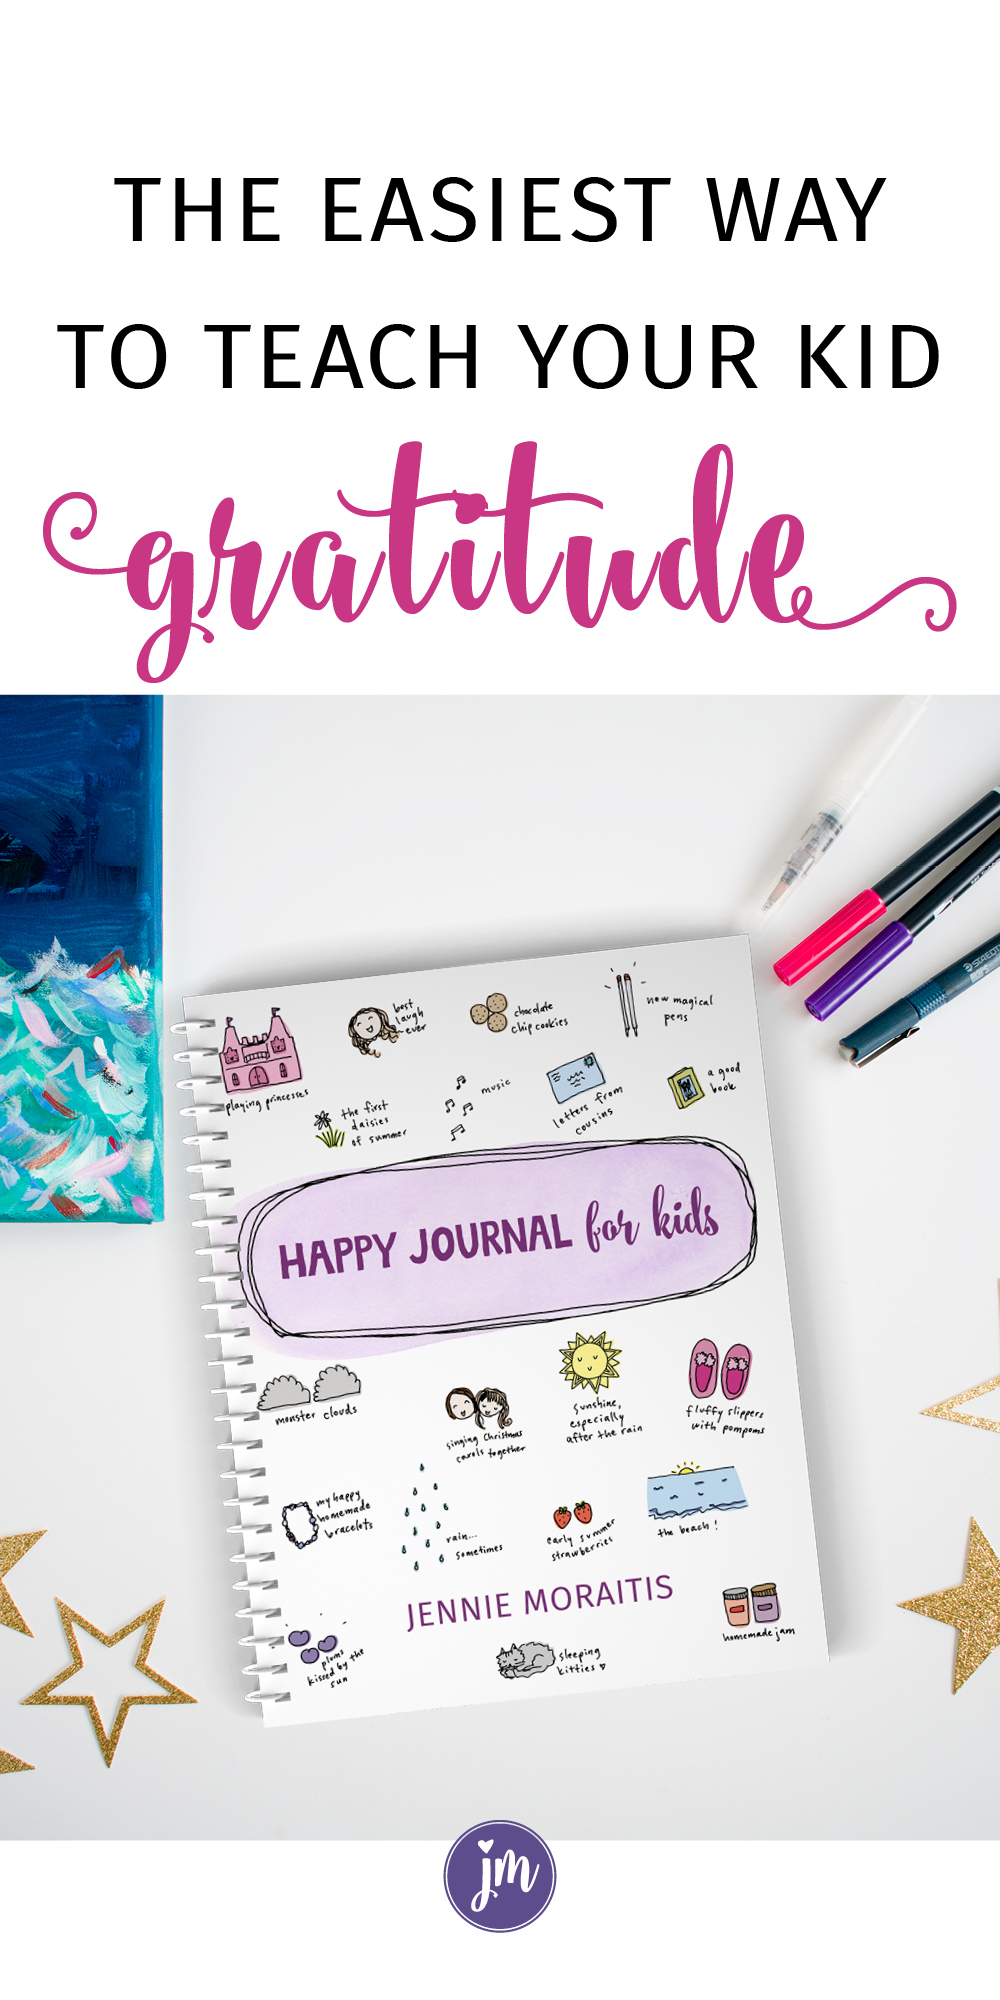 Happy Journal for Kids — A Gratitude Journal for Children